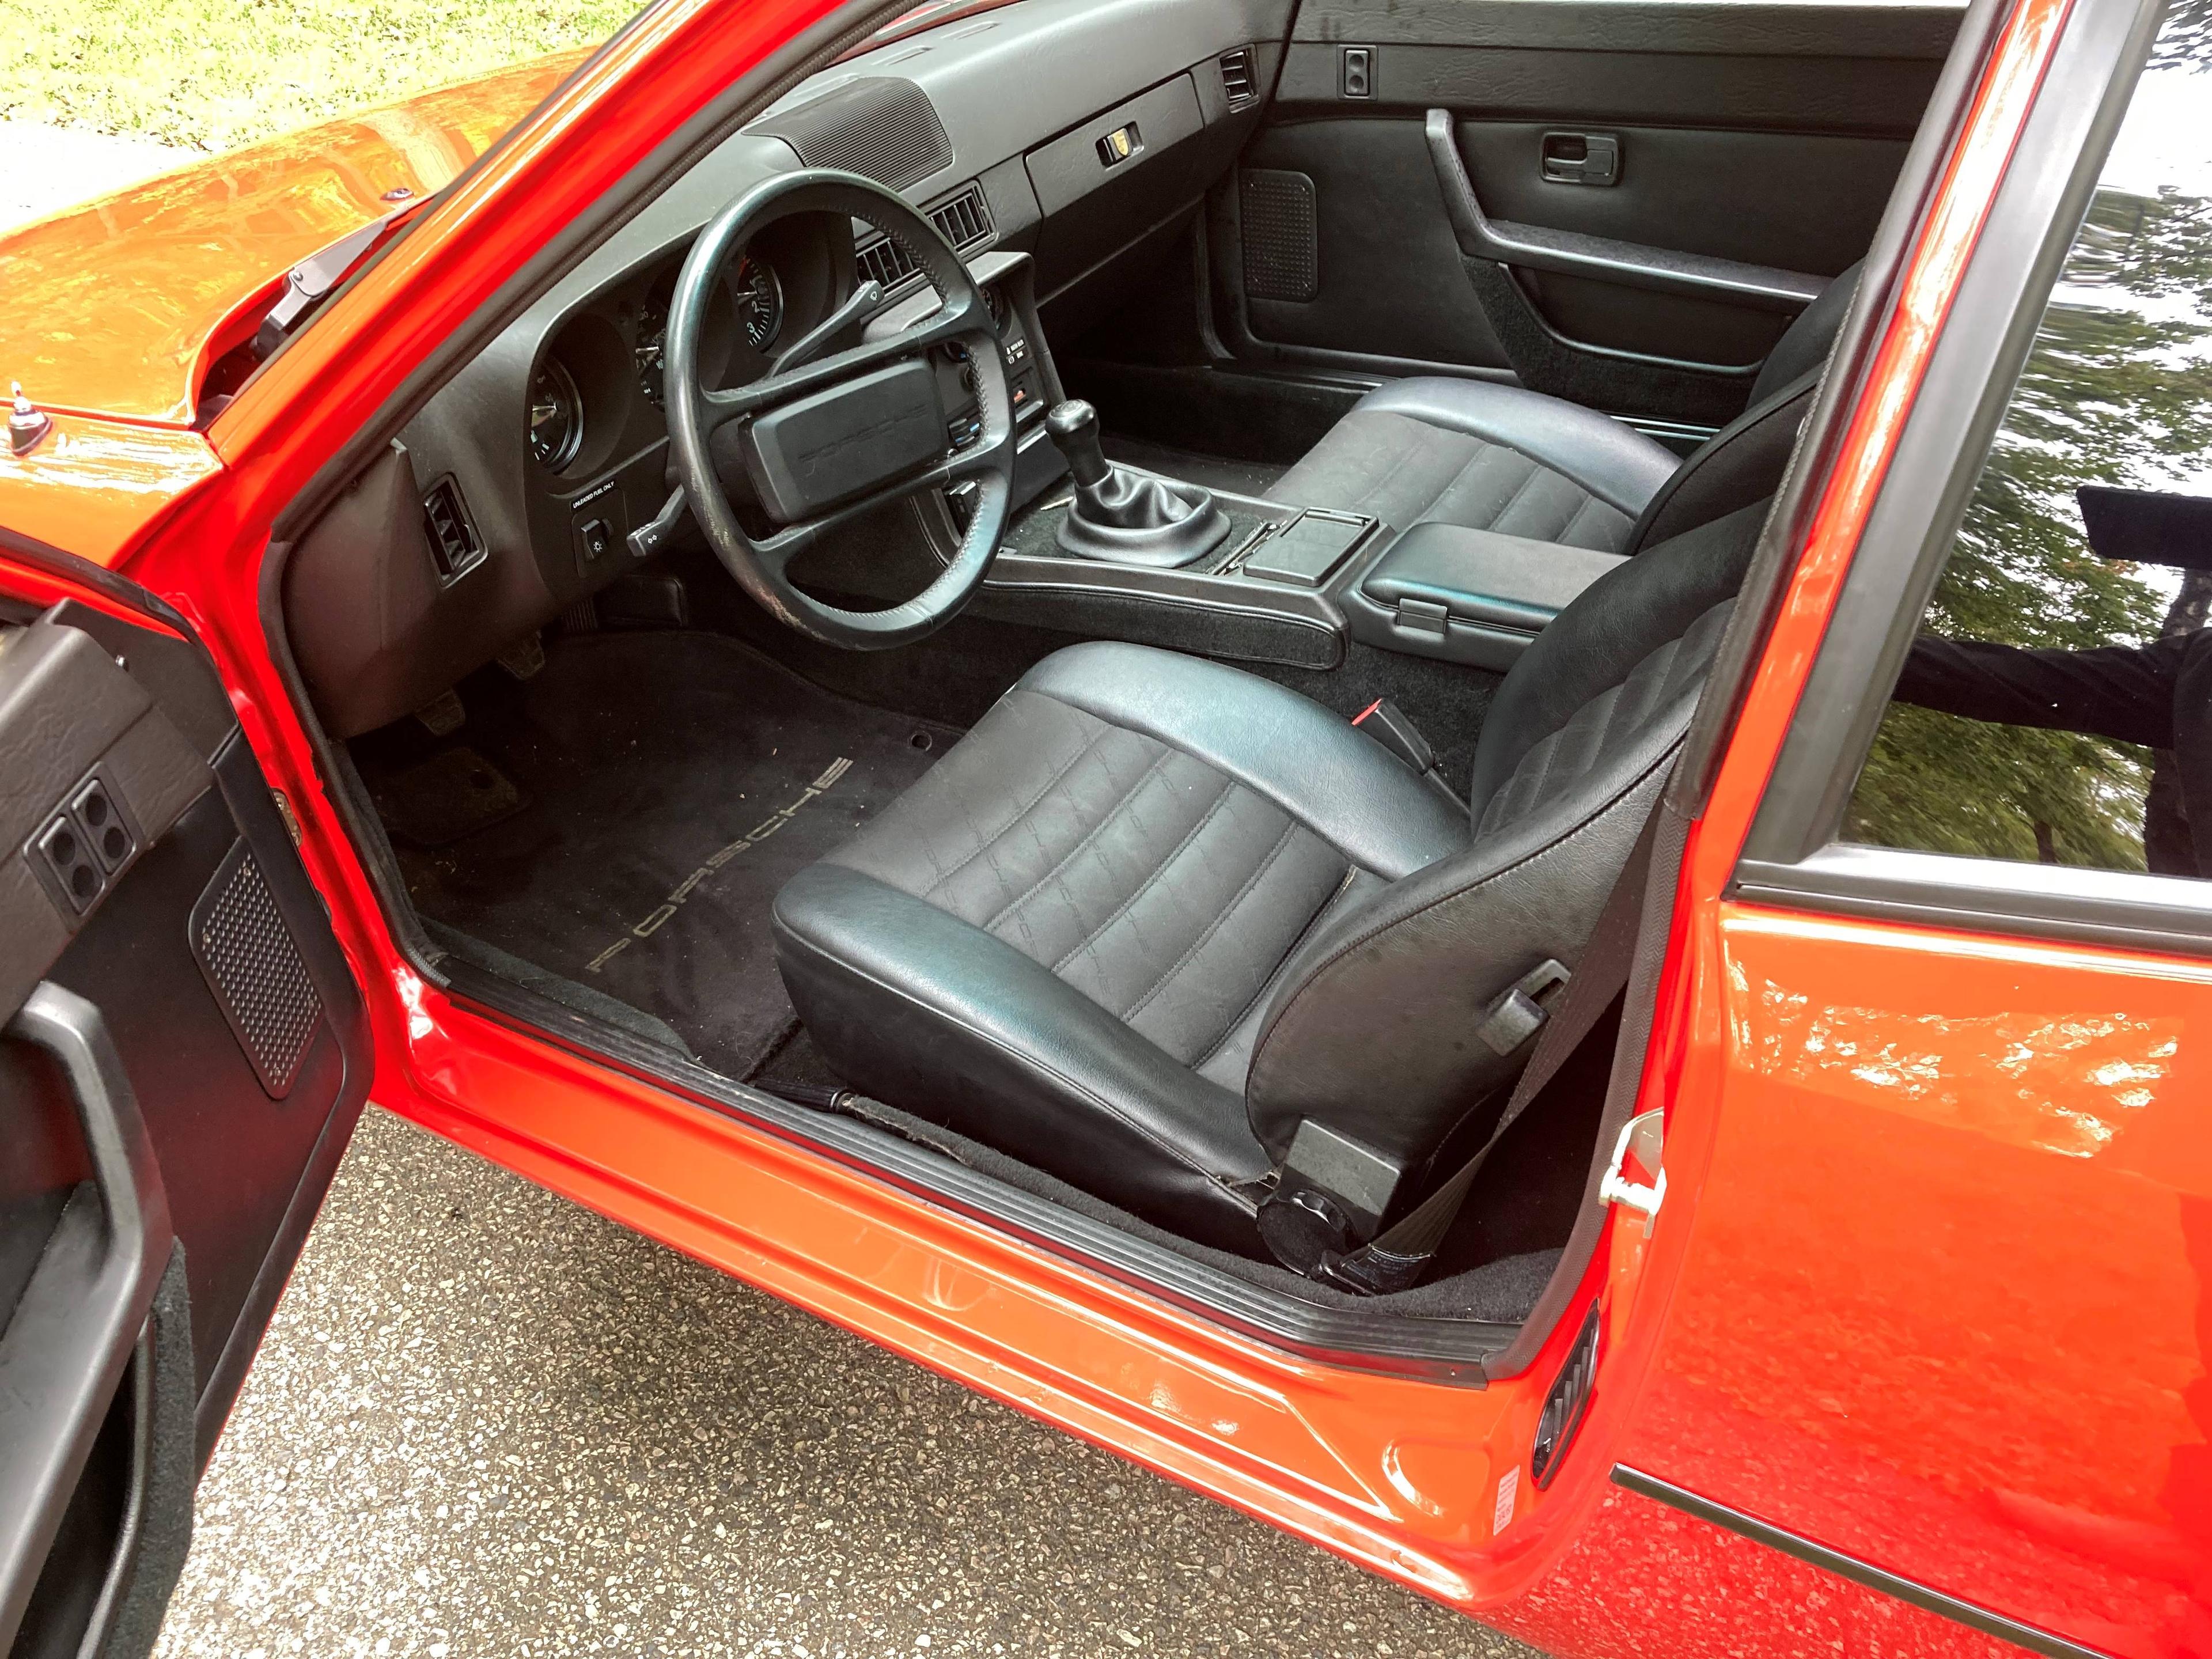 1987 Porsche 924S Coupe. Original Survivor. Left to son. Original window st